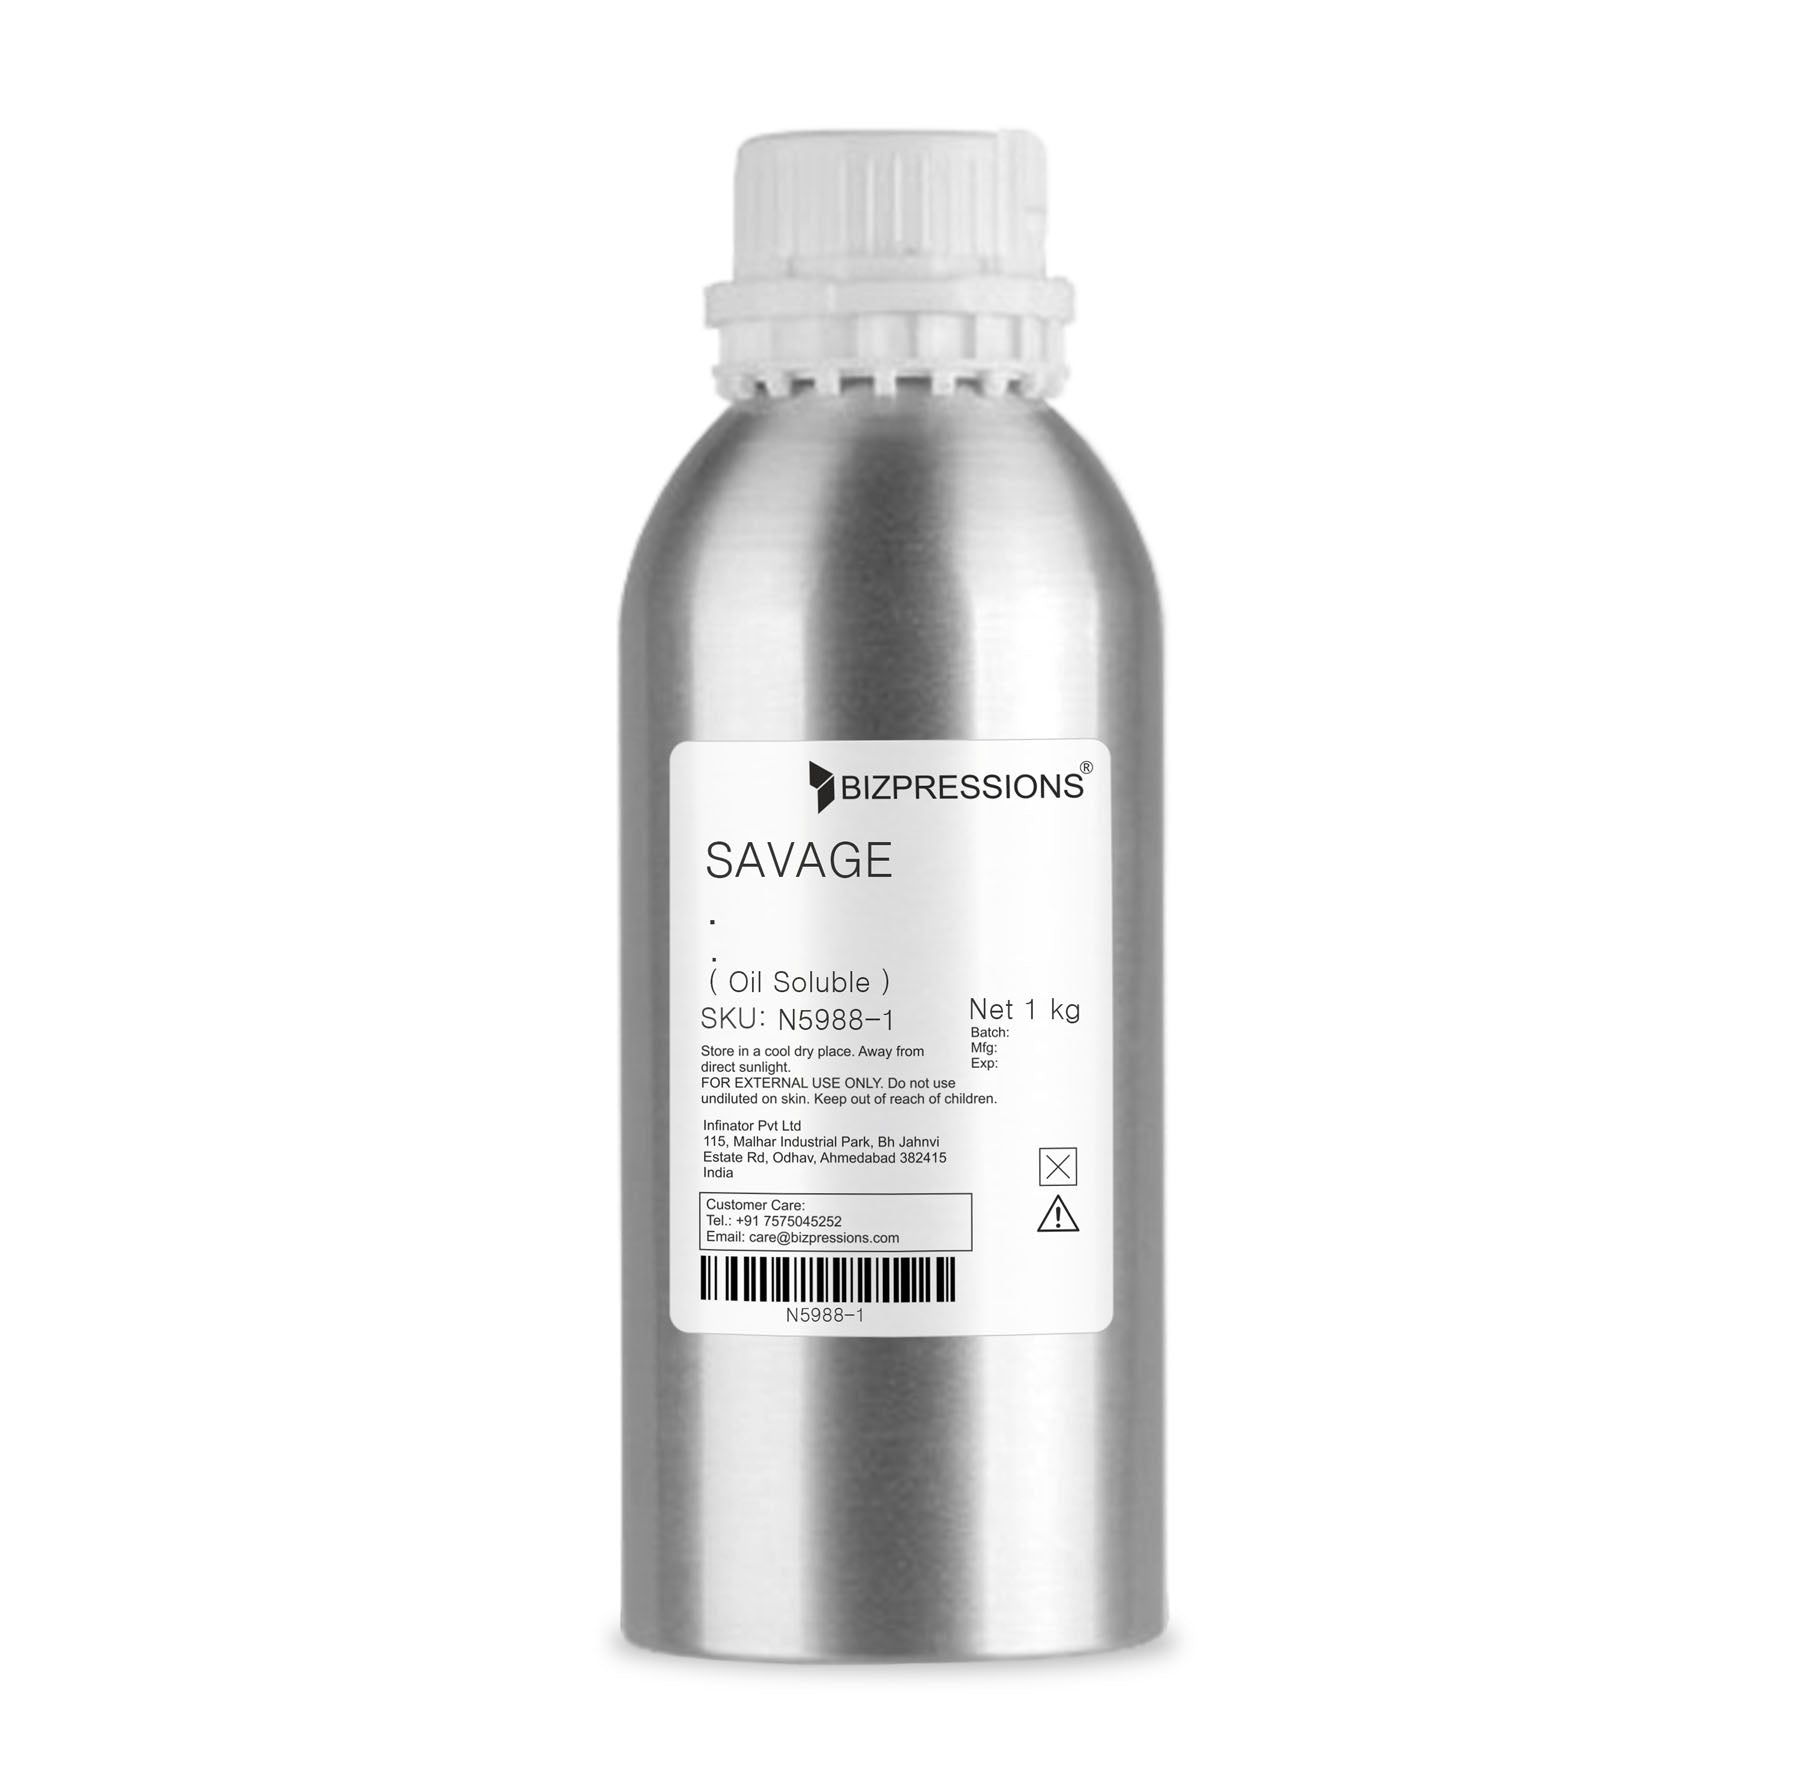 SAVAGE - Fragrance ( Oil Soluble ) - 1 kg